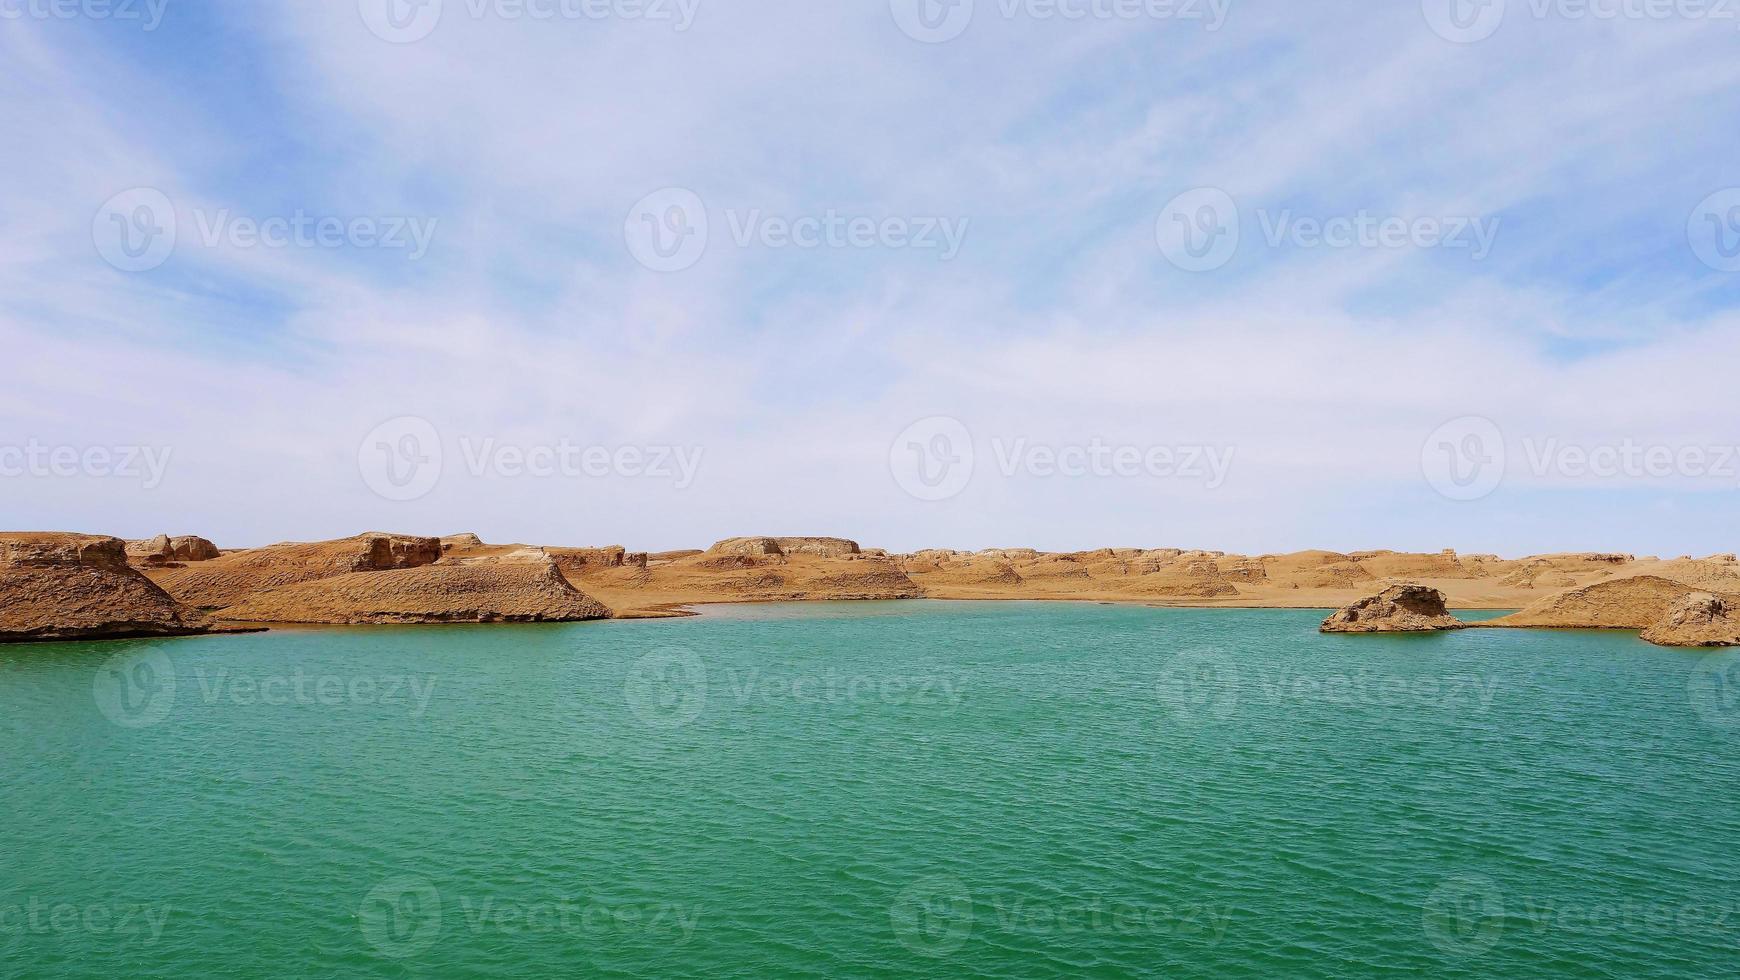 Dachaidan Wusute Wasser Yadan Geologischer Park Qinghai China foto